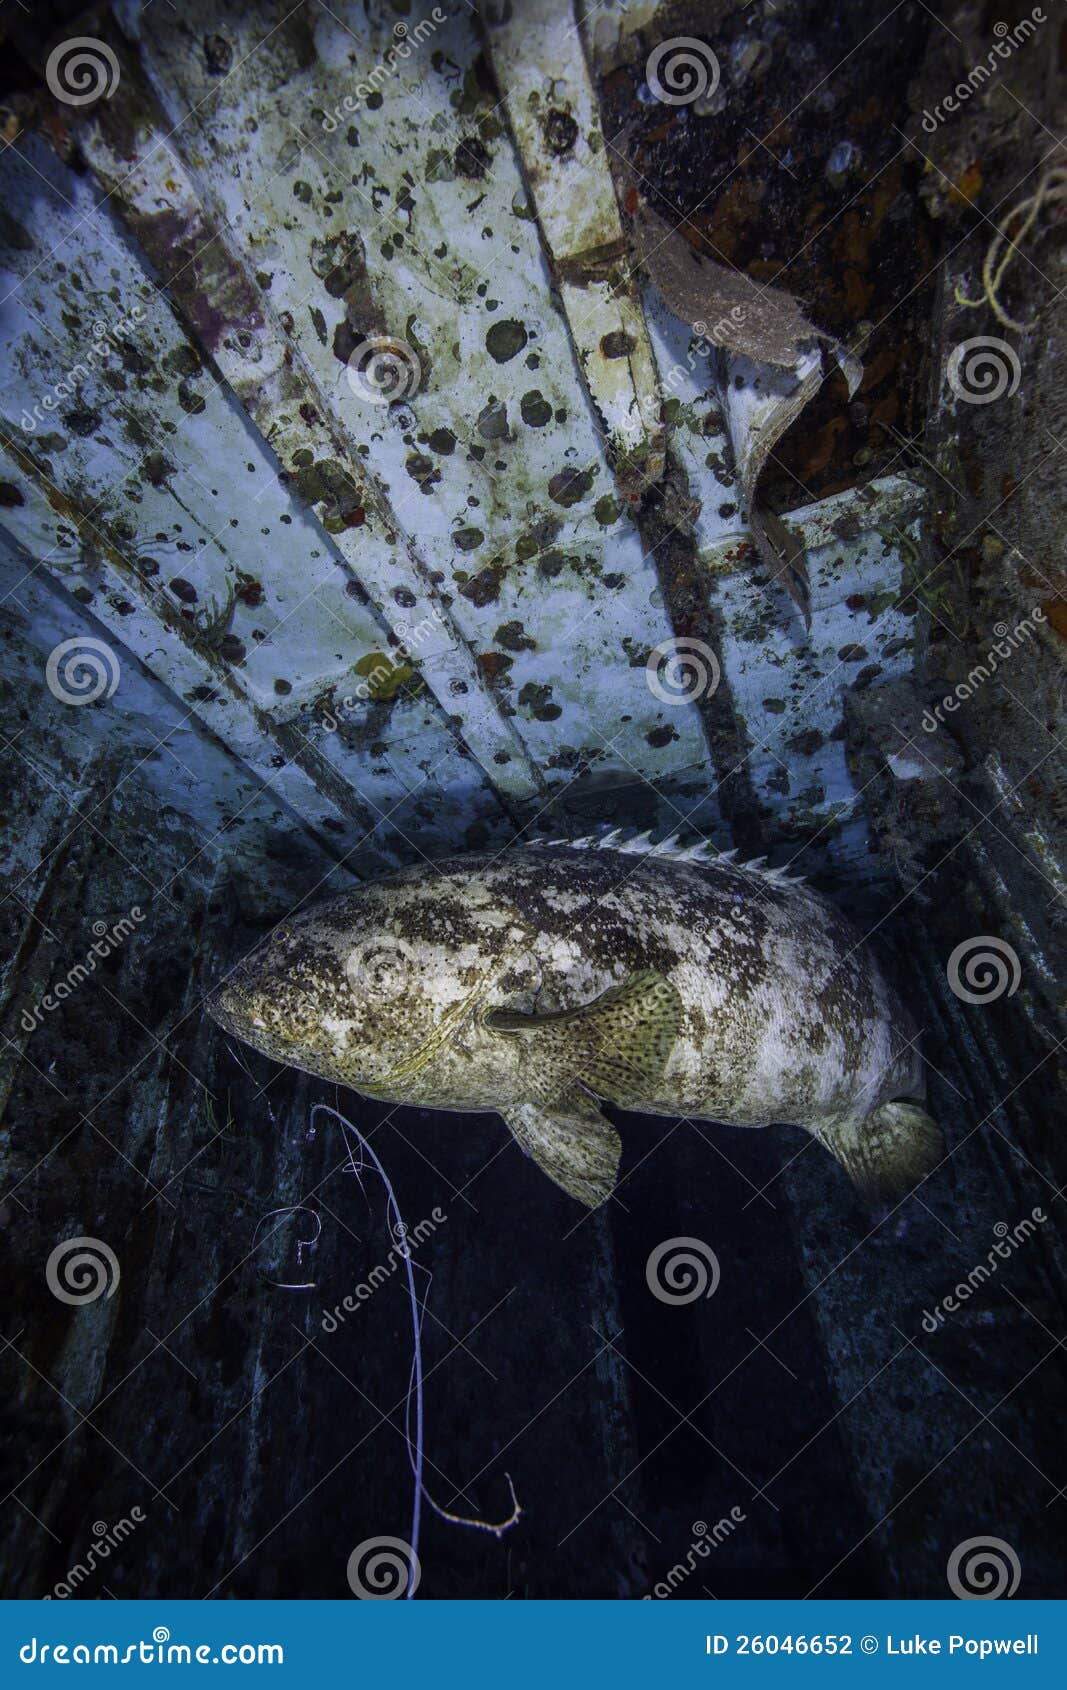 goliath grouper on the spiegel grove in key largo